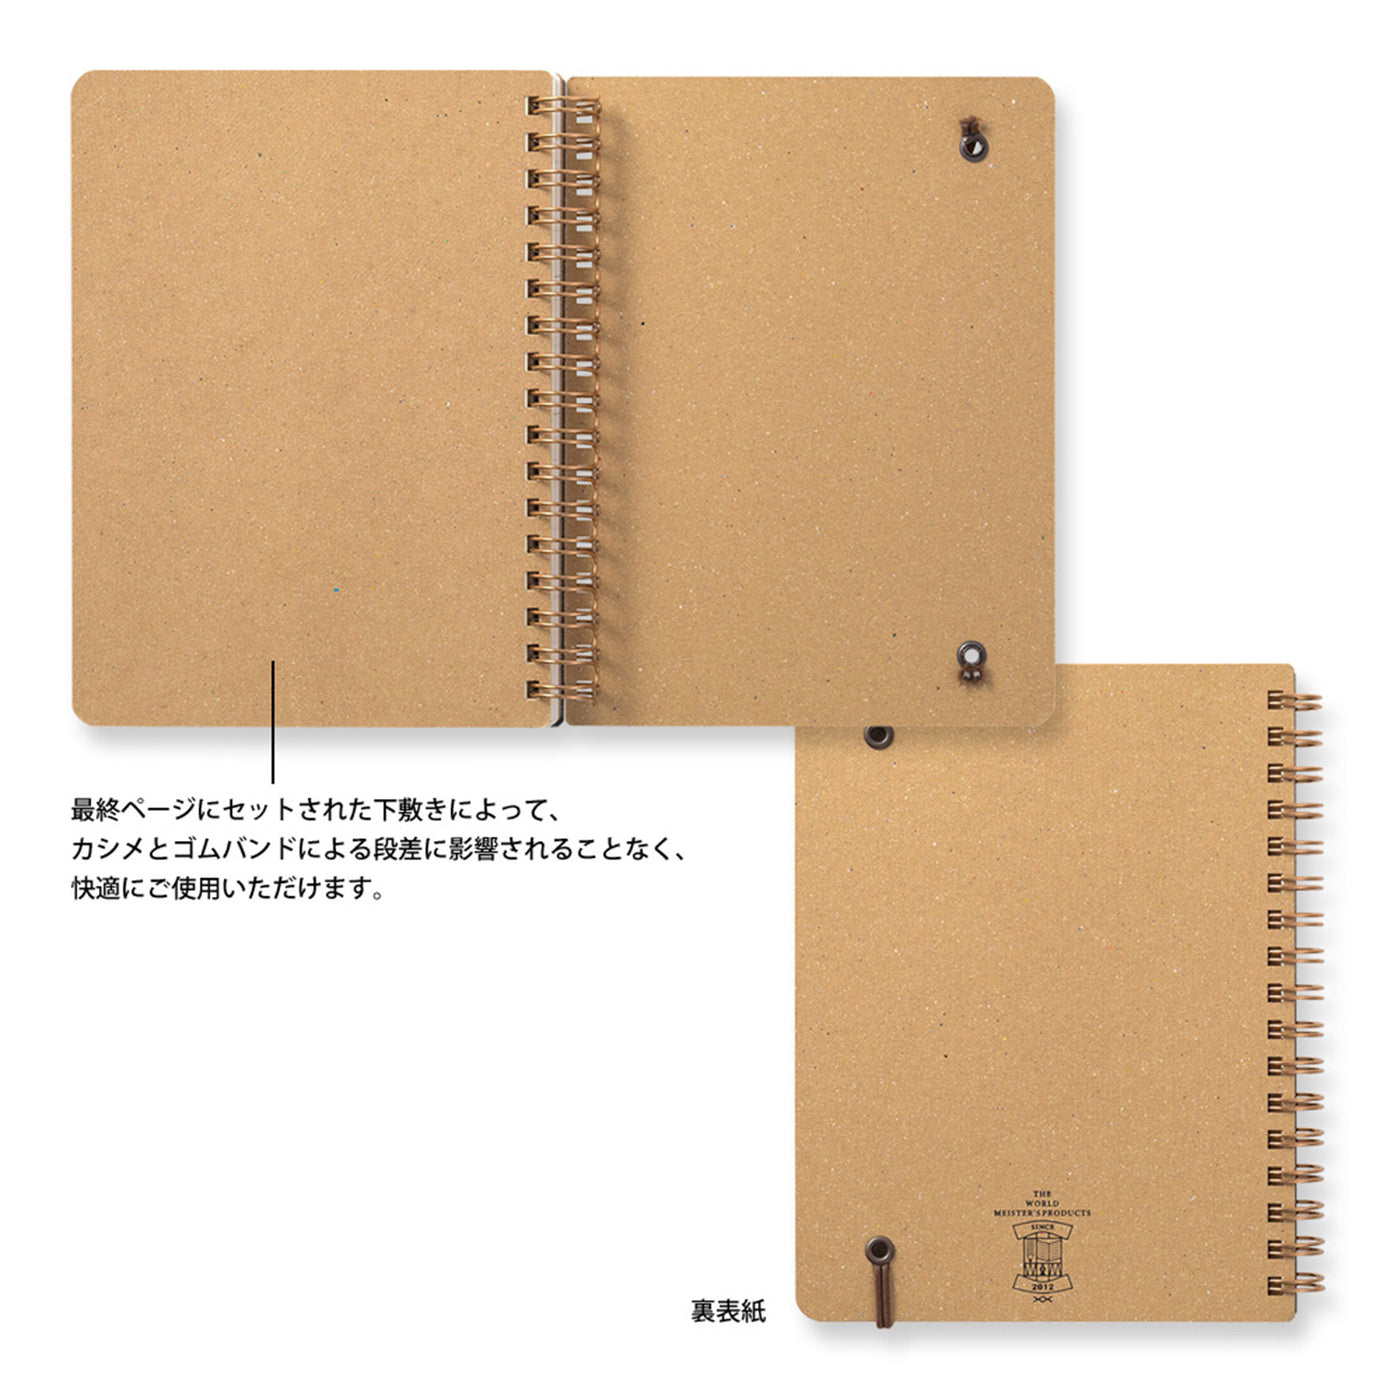 Midori WM Grain Black Wirebound Notebook - B6, Ruled